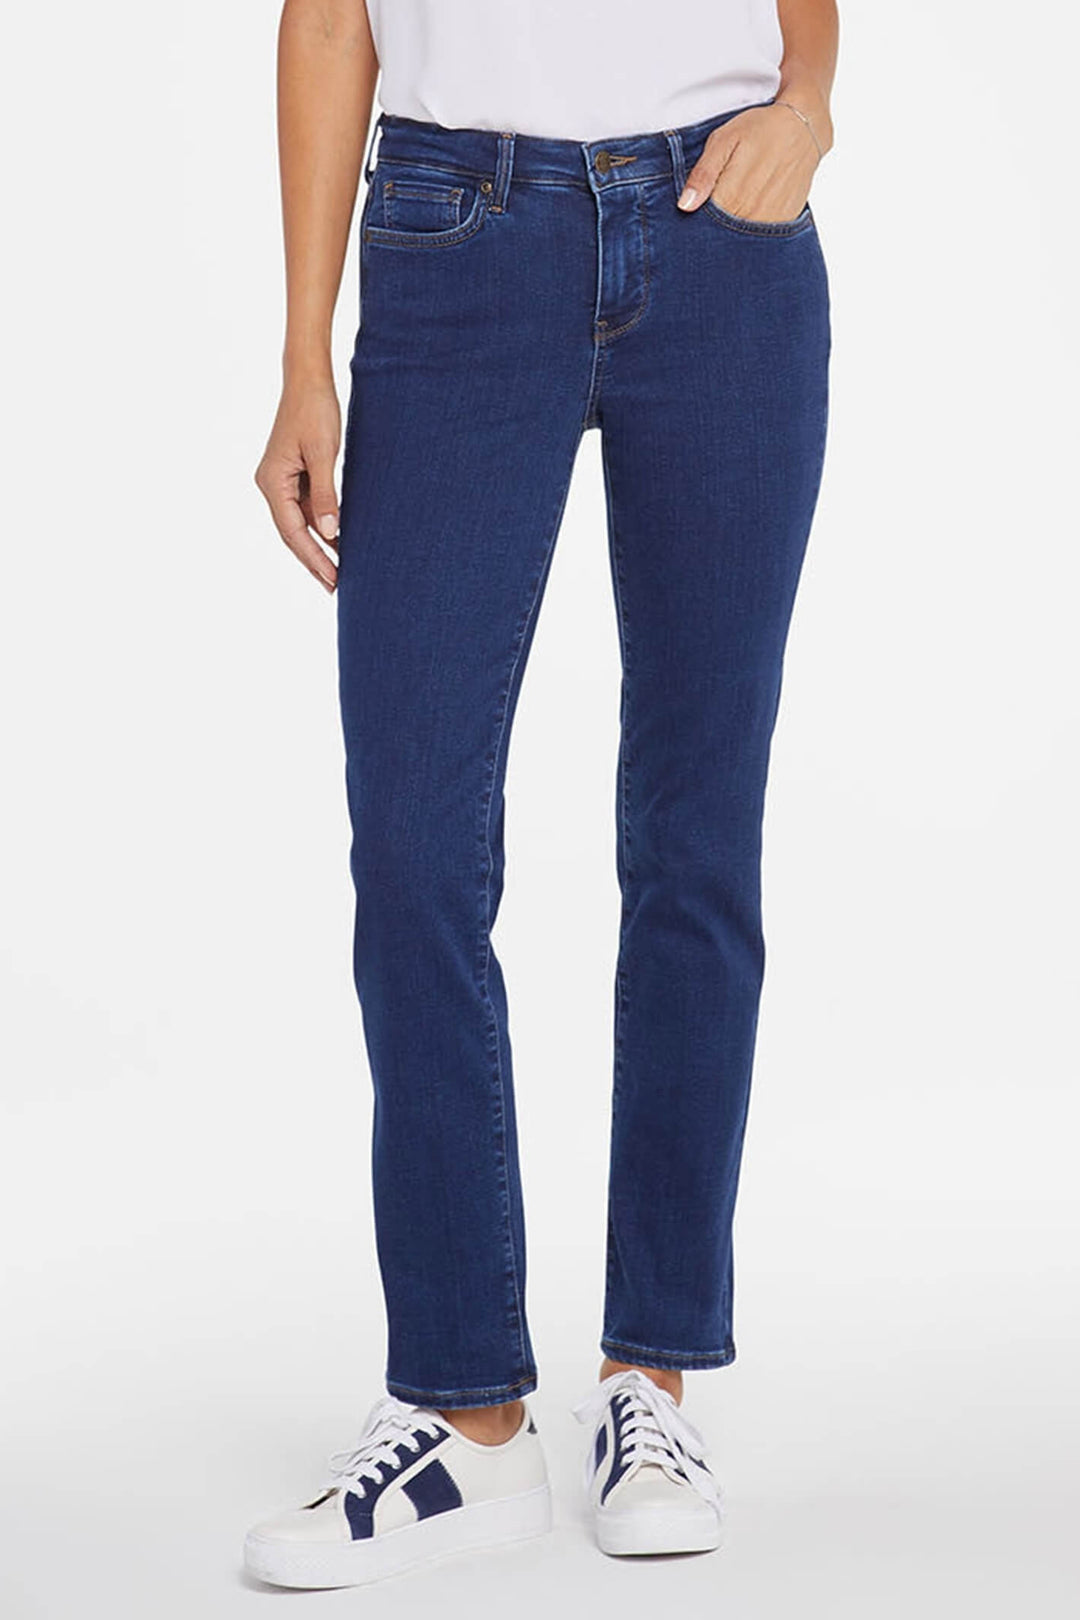 NYDJ MPRISS8518 Sheri Medium Blue Slim Quin Jeans - Shirley Allum Boutique